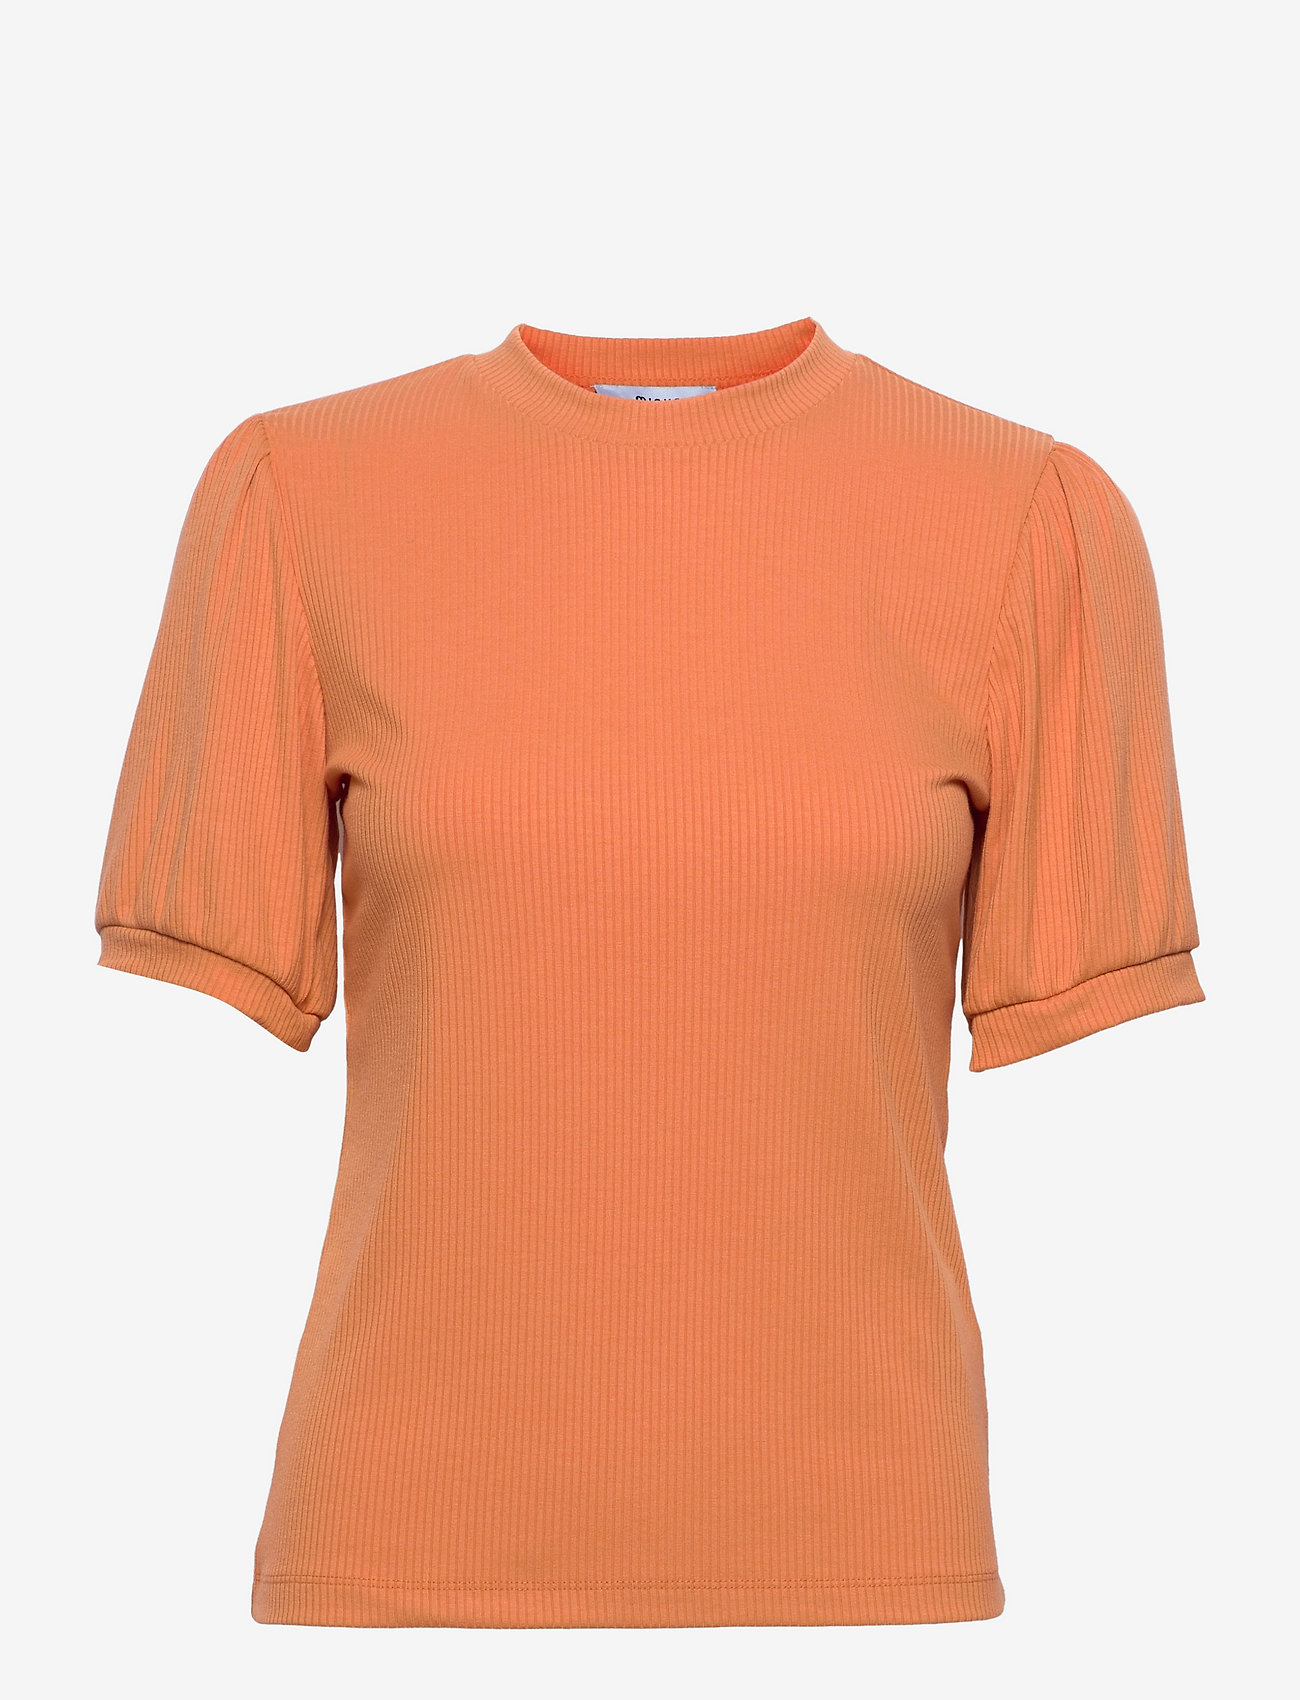 Minus - Johanna T-shirt - t-shirty - sunbaked - 1